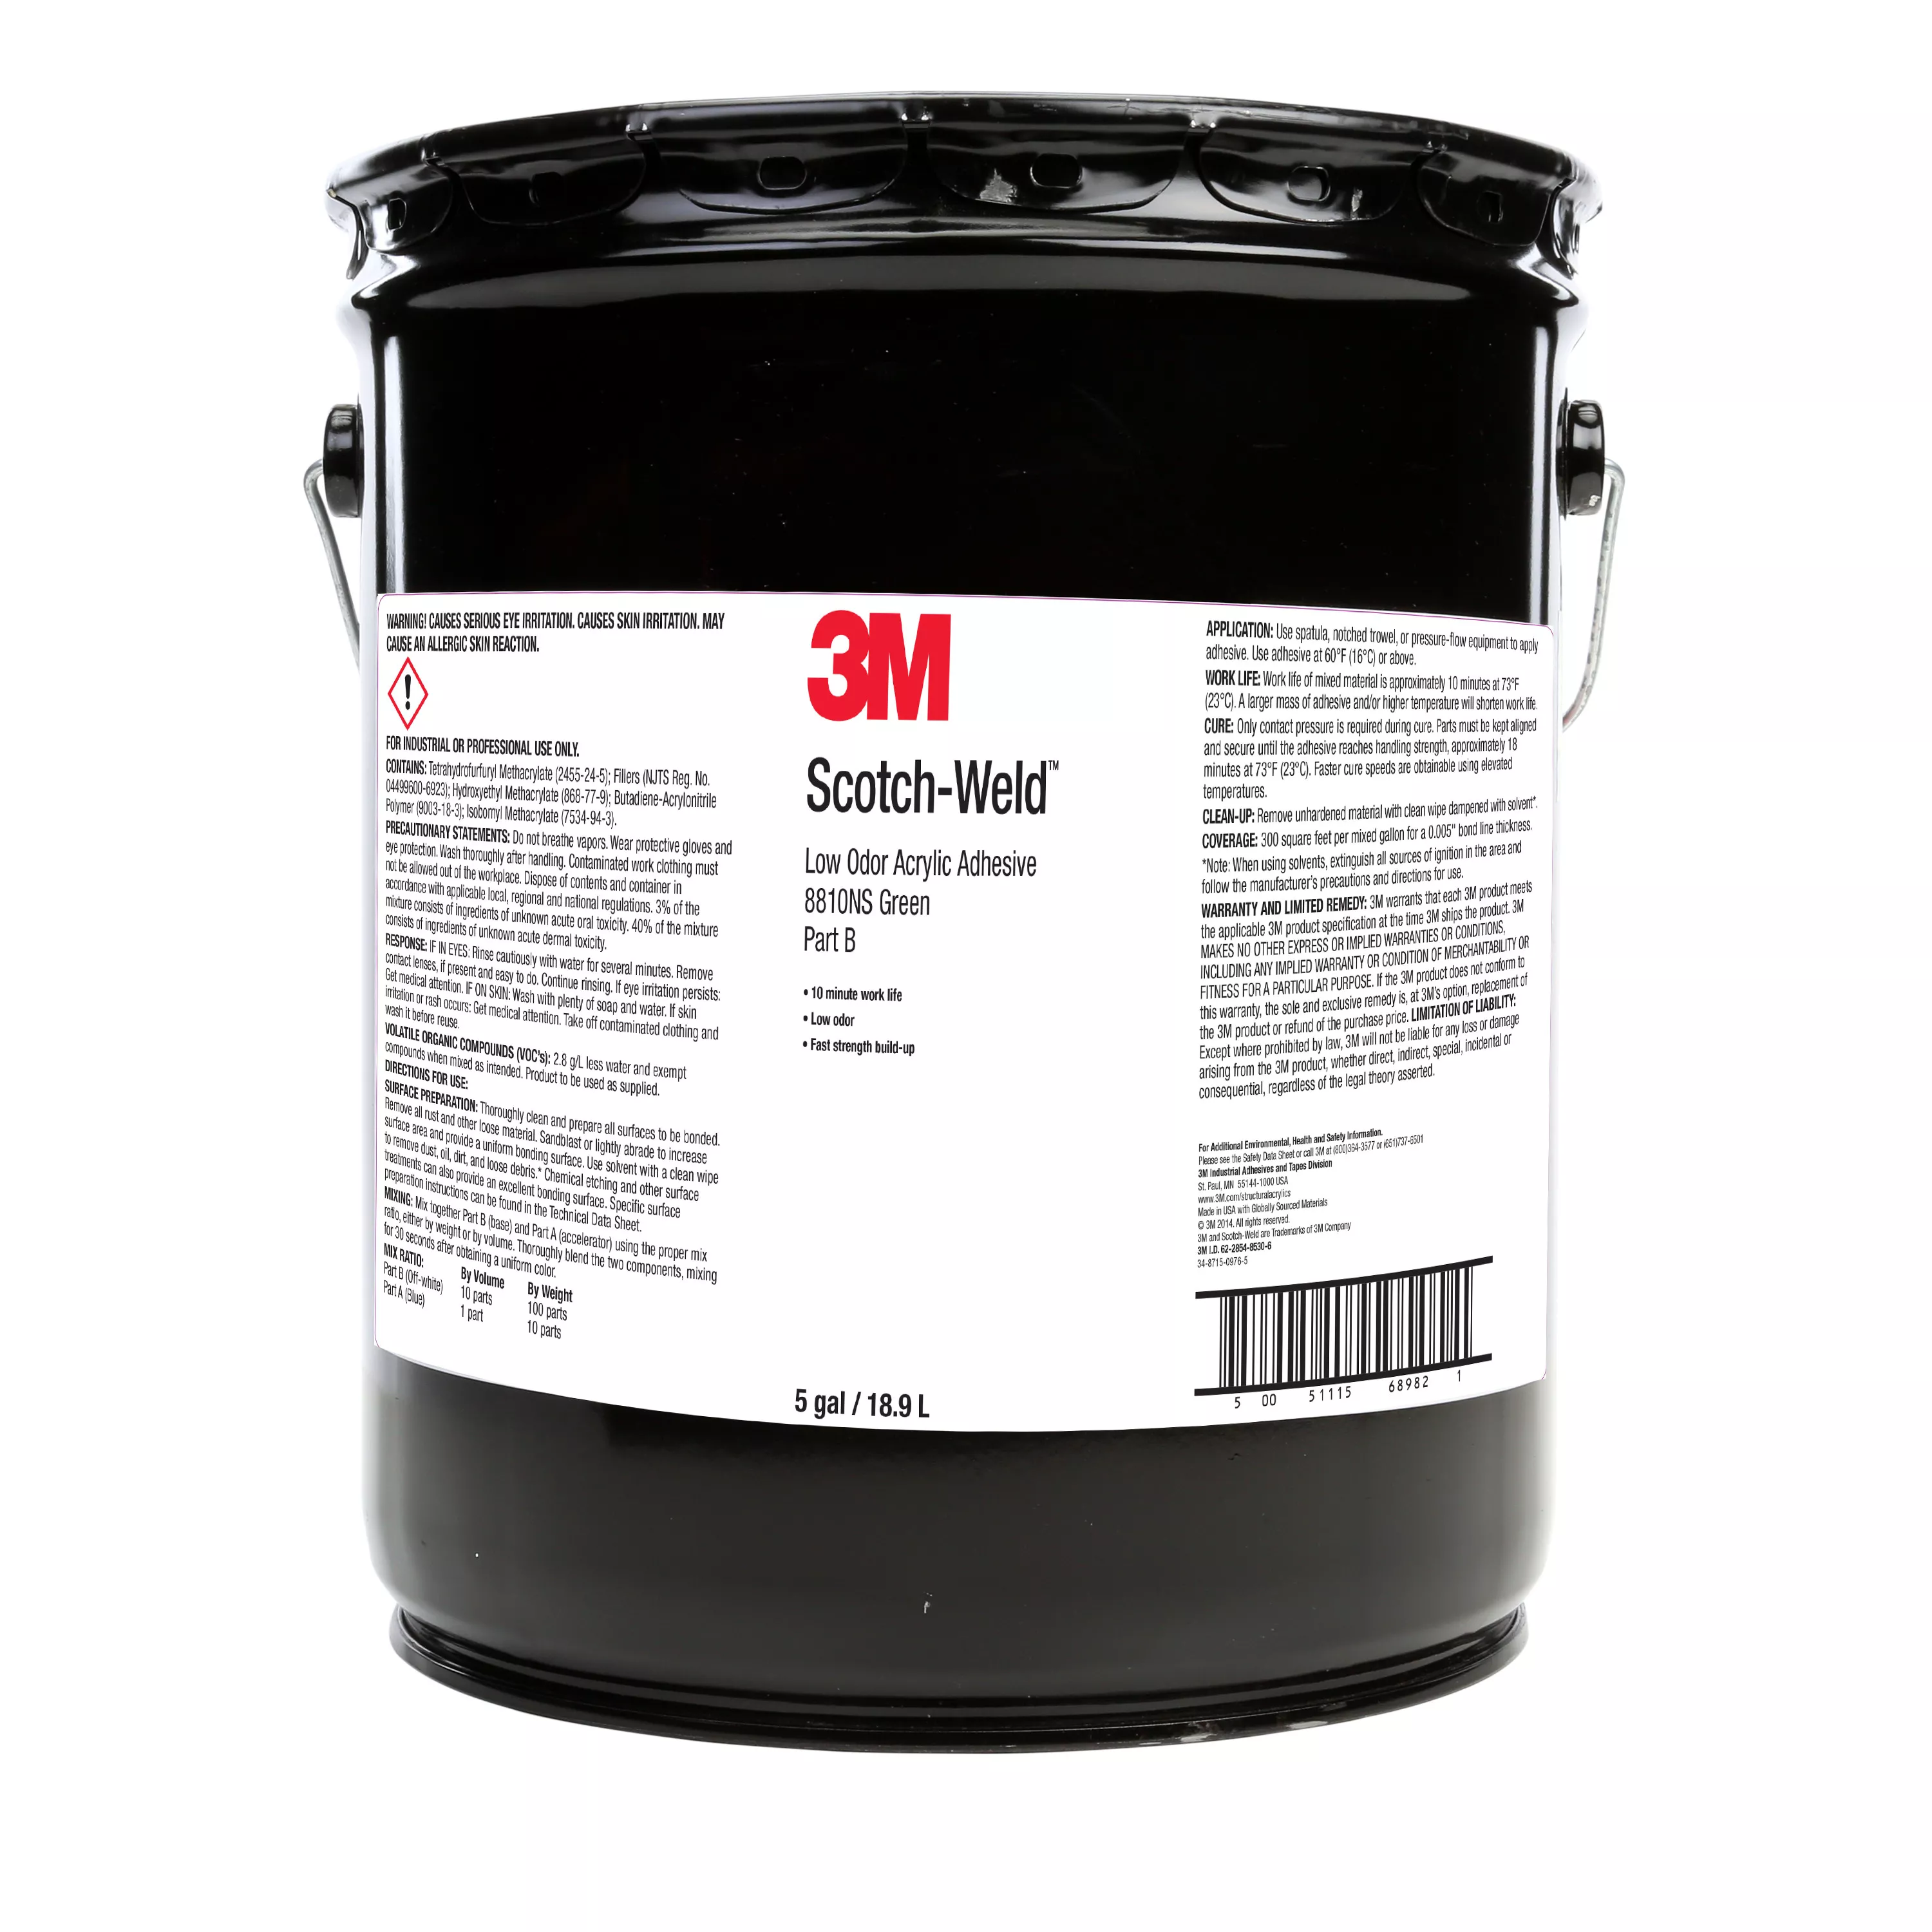 3M™ Scotch-Weld™ Low Odor Acrylic Adhesive 8810NS, Green, Part B, 5
Gallon (Pail), Drum